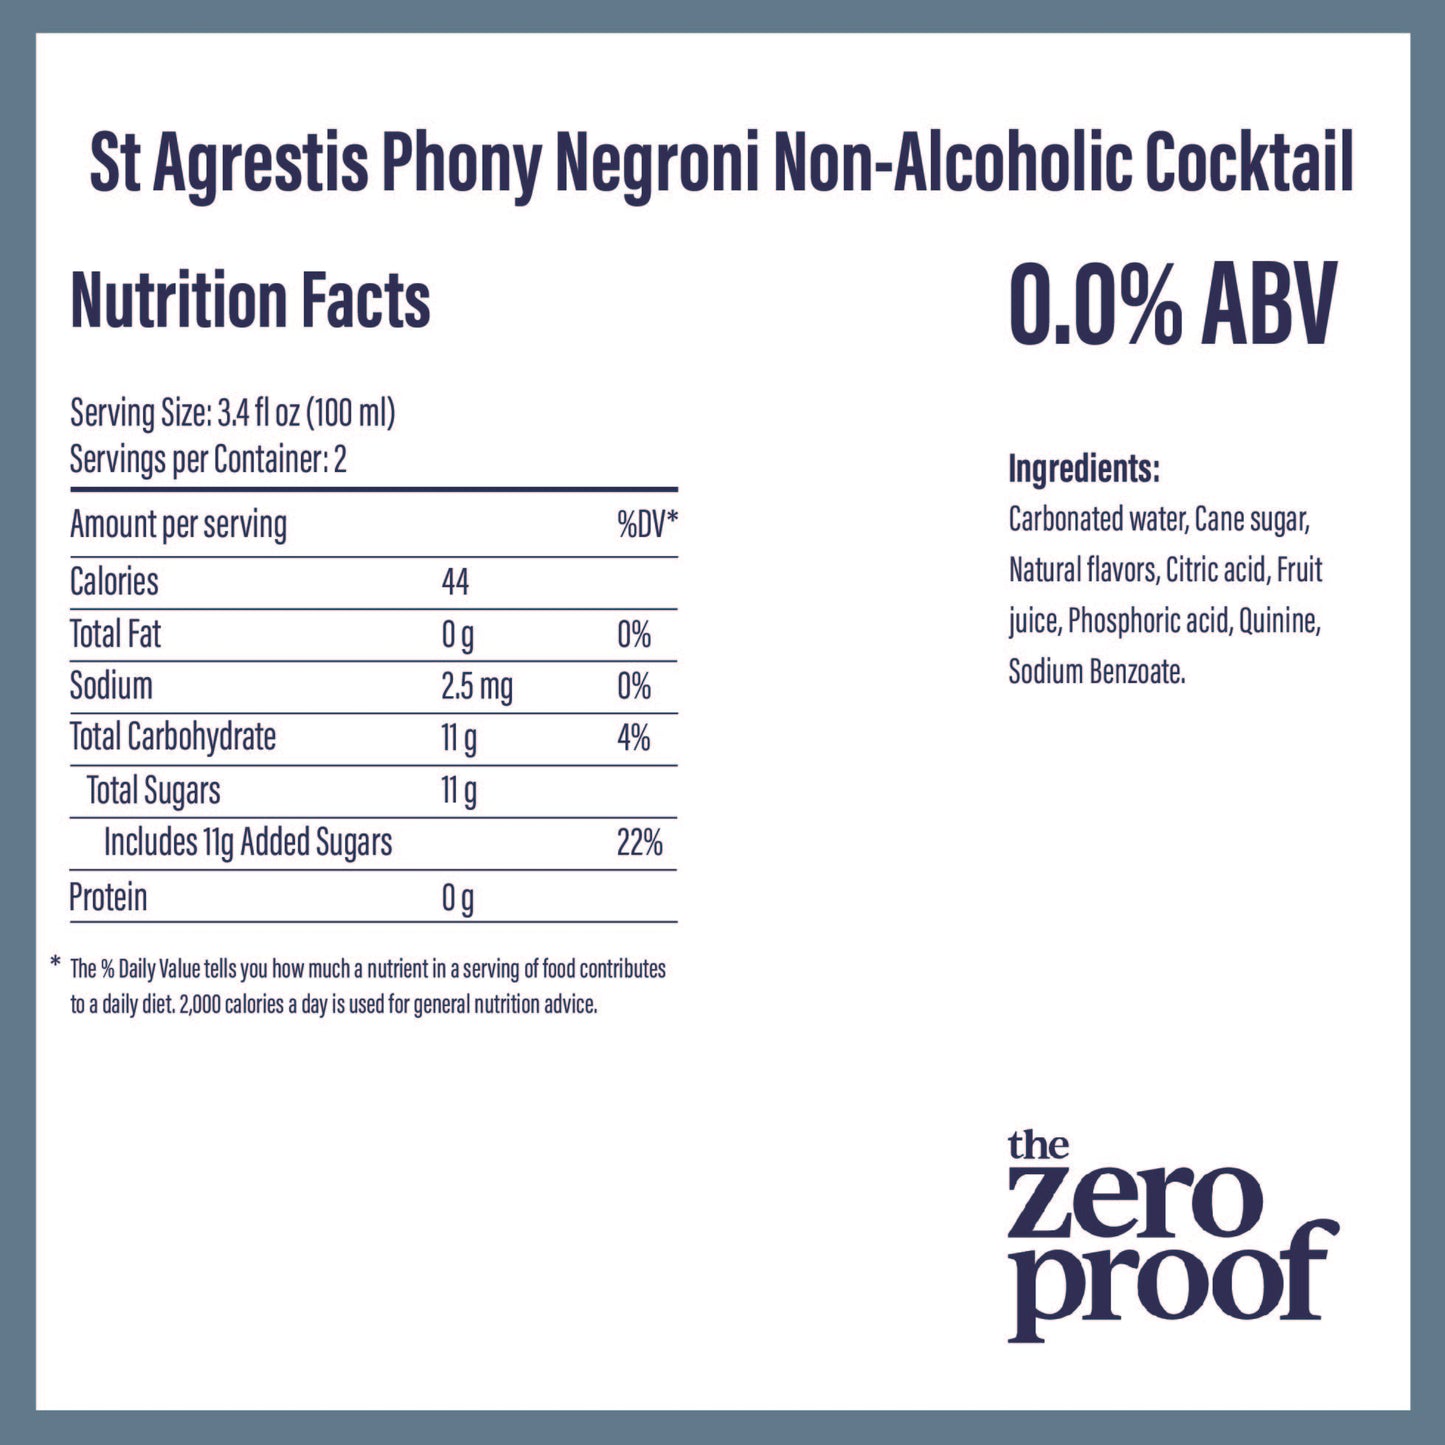 St Agrestis Phony Negroni Non-Alcoholic Cocktail